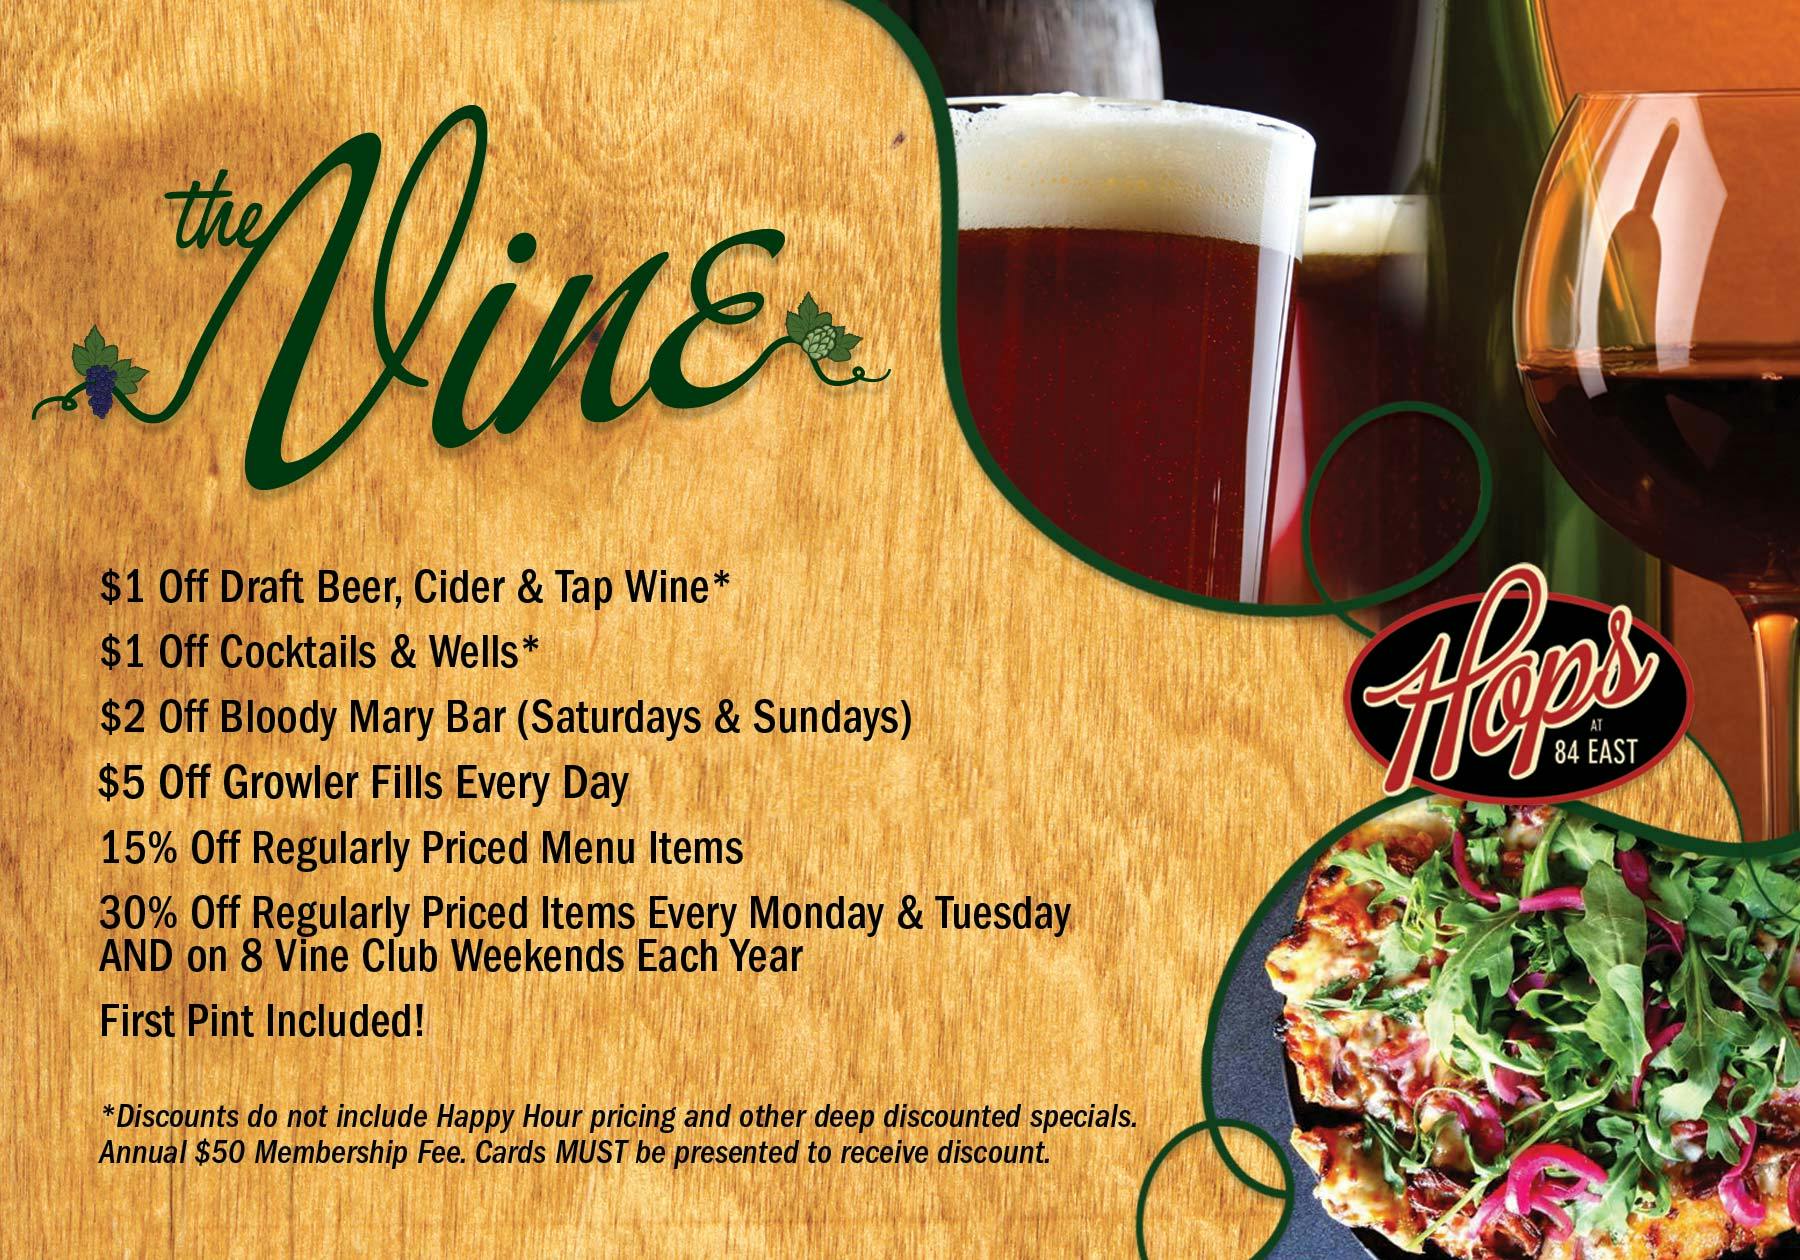 Vine Club Membership | Hops at 84 East